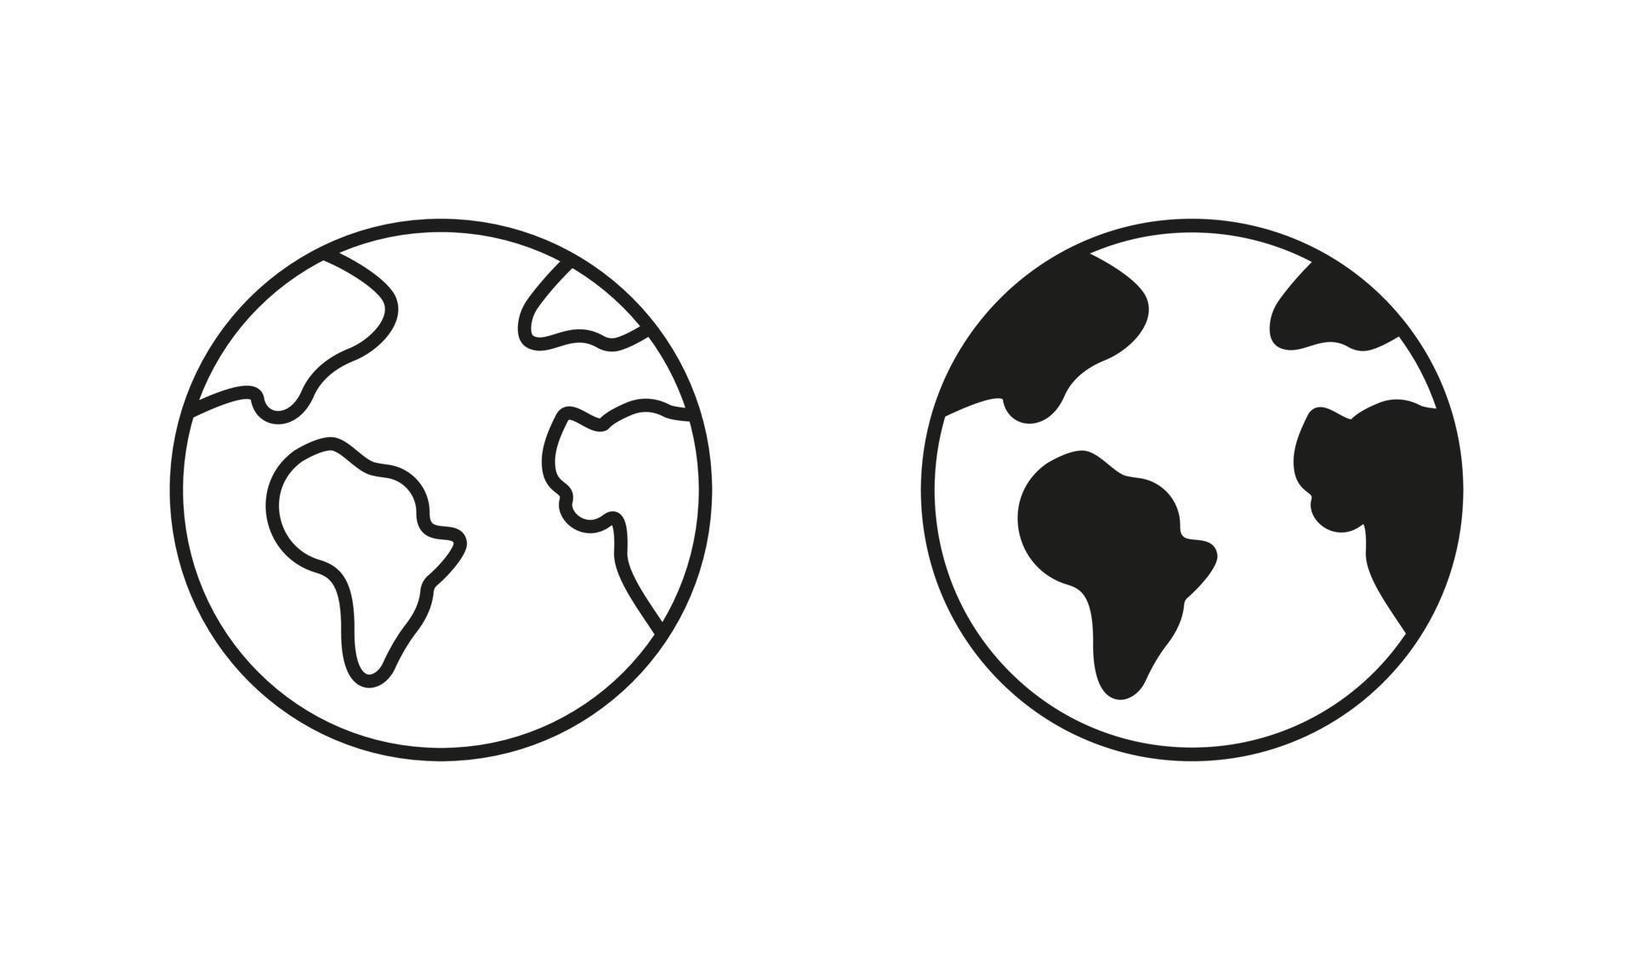 globo tierra silueta y línea icono colocar. global planeta esfera mapa pictograma. redondo mundo continente Europa África America Australia Asia signo. editable ataque. aislado vector ilustración.